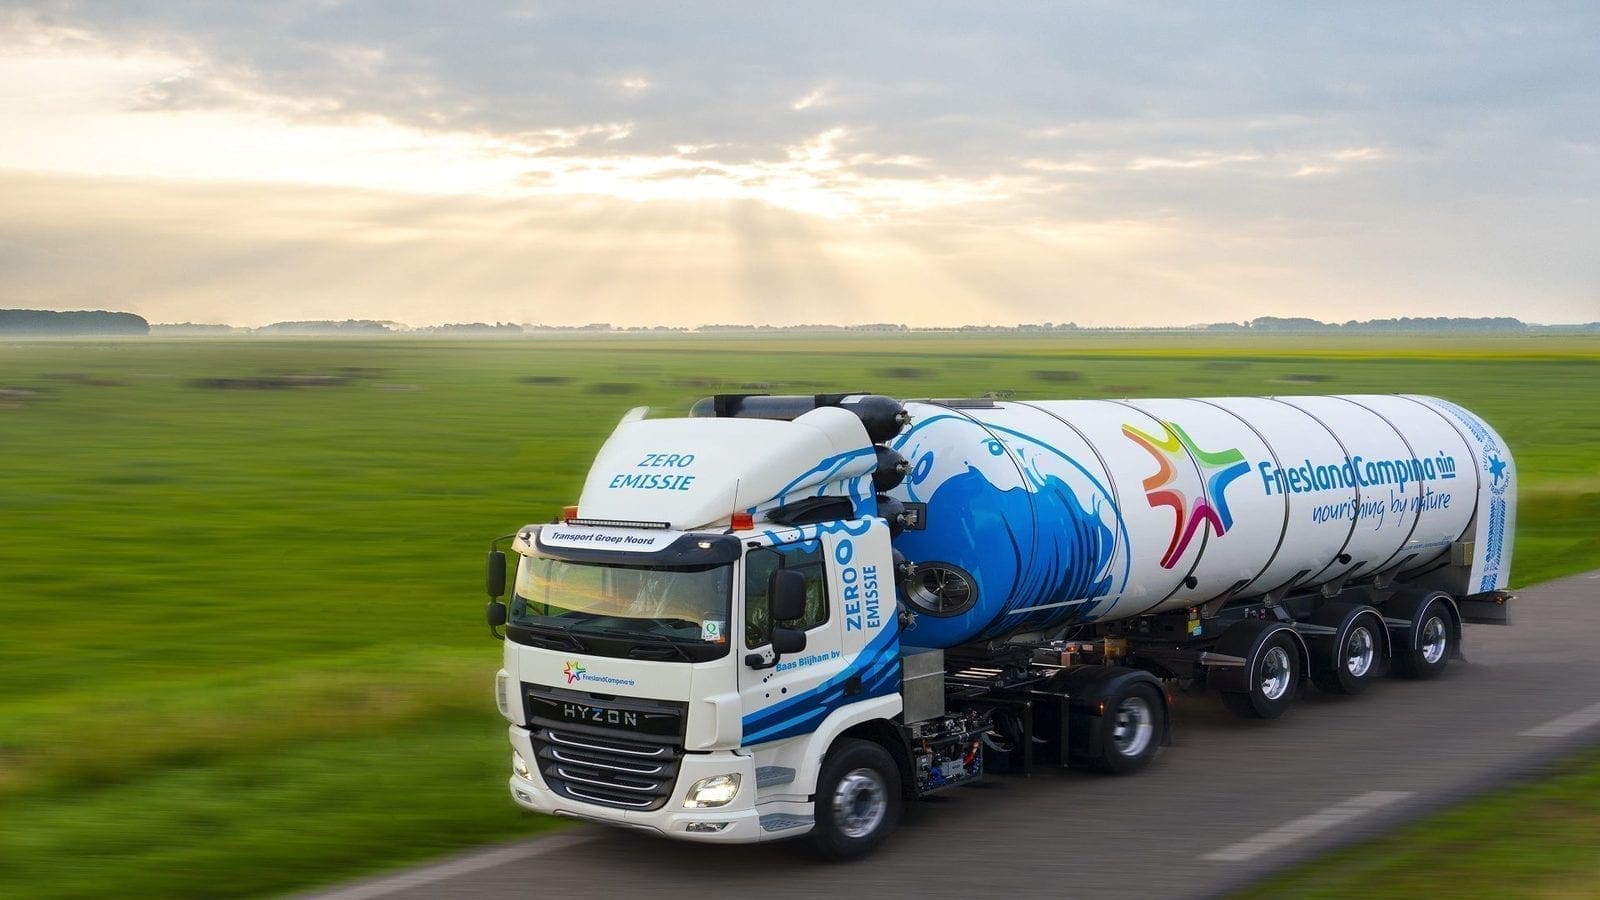 FrieslandCampina launches hydrogen-powered milk truck in journey towards CO2-neutral future